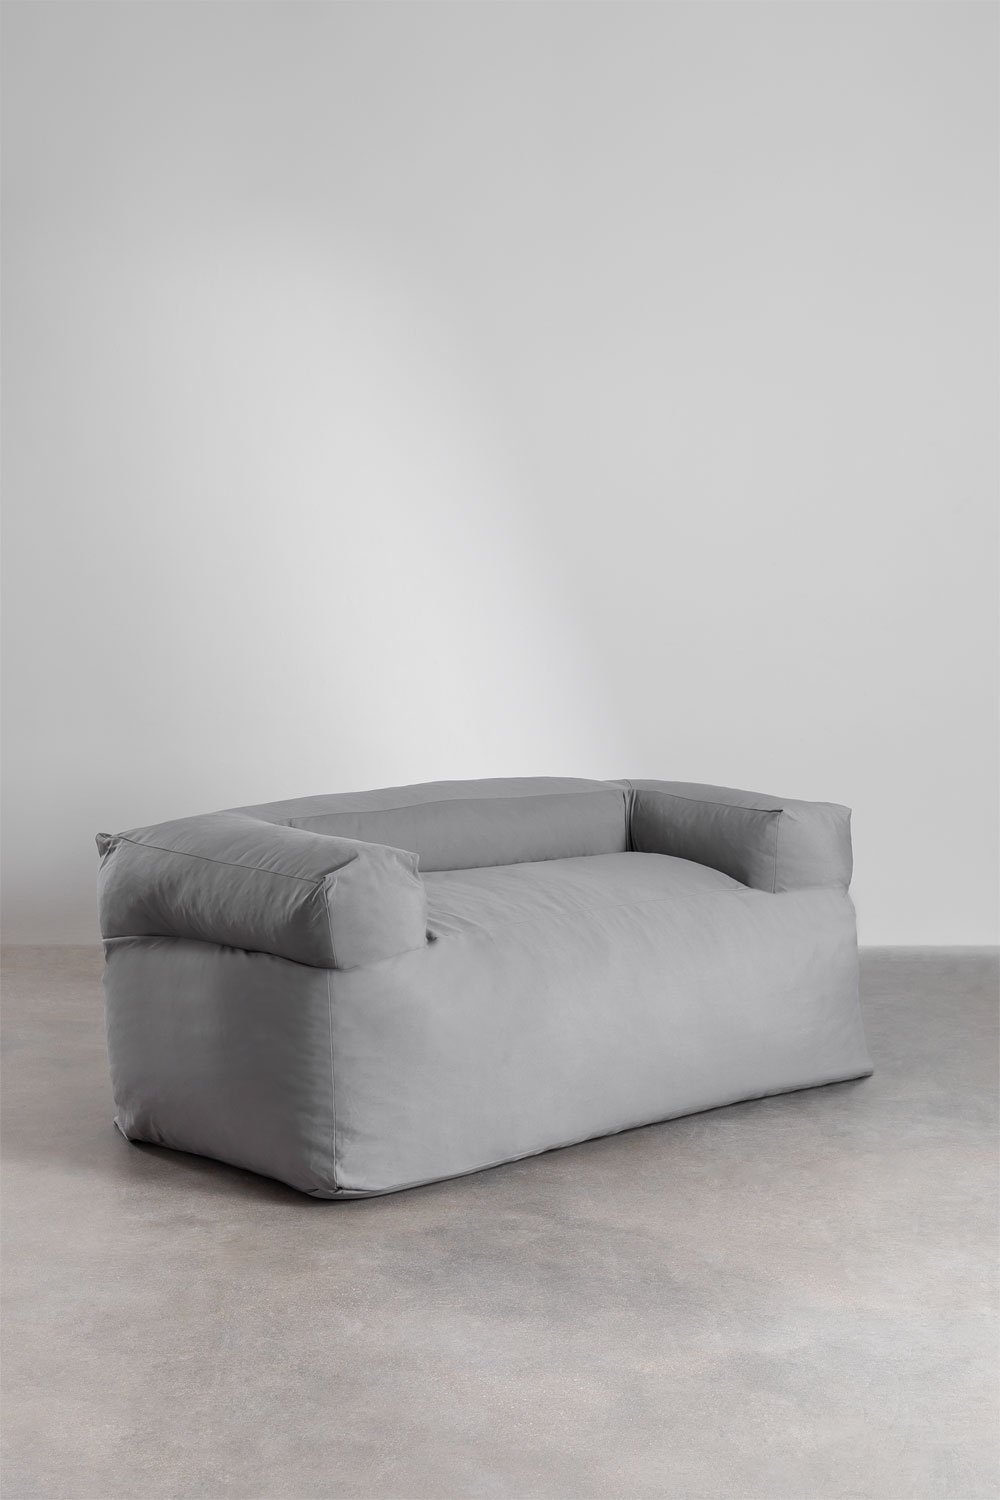 Darmian 2 Seater Sofa, gallery image 1